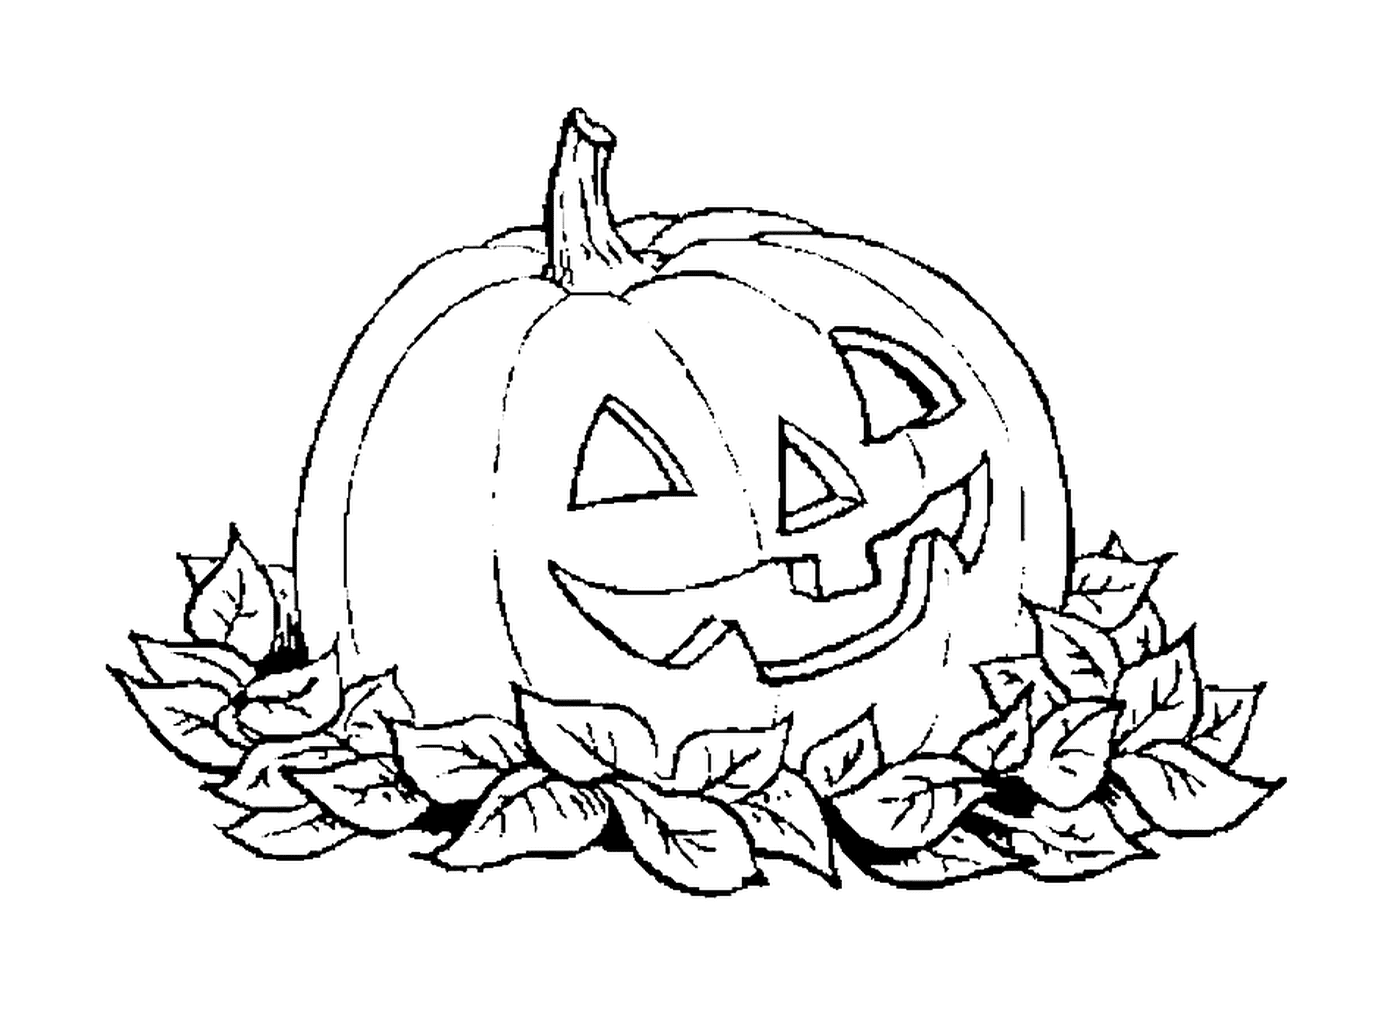  Halloween pumpkin with dead leaves 